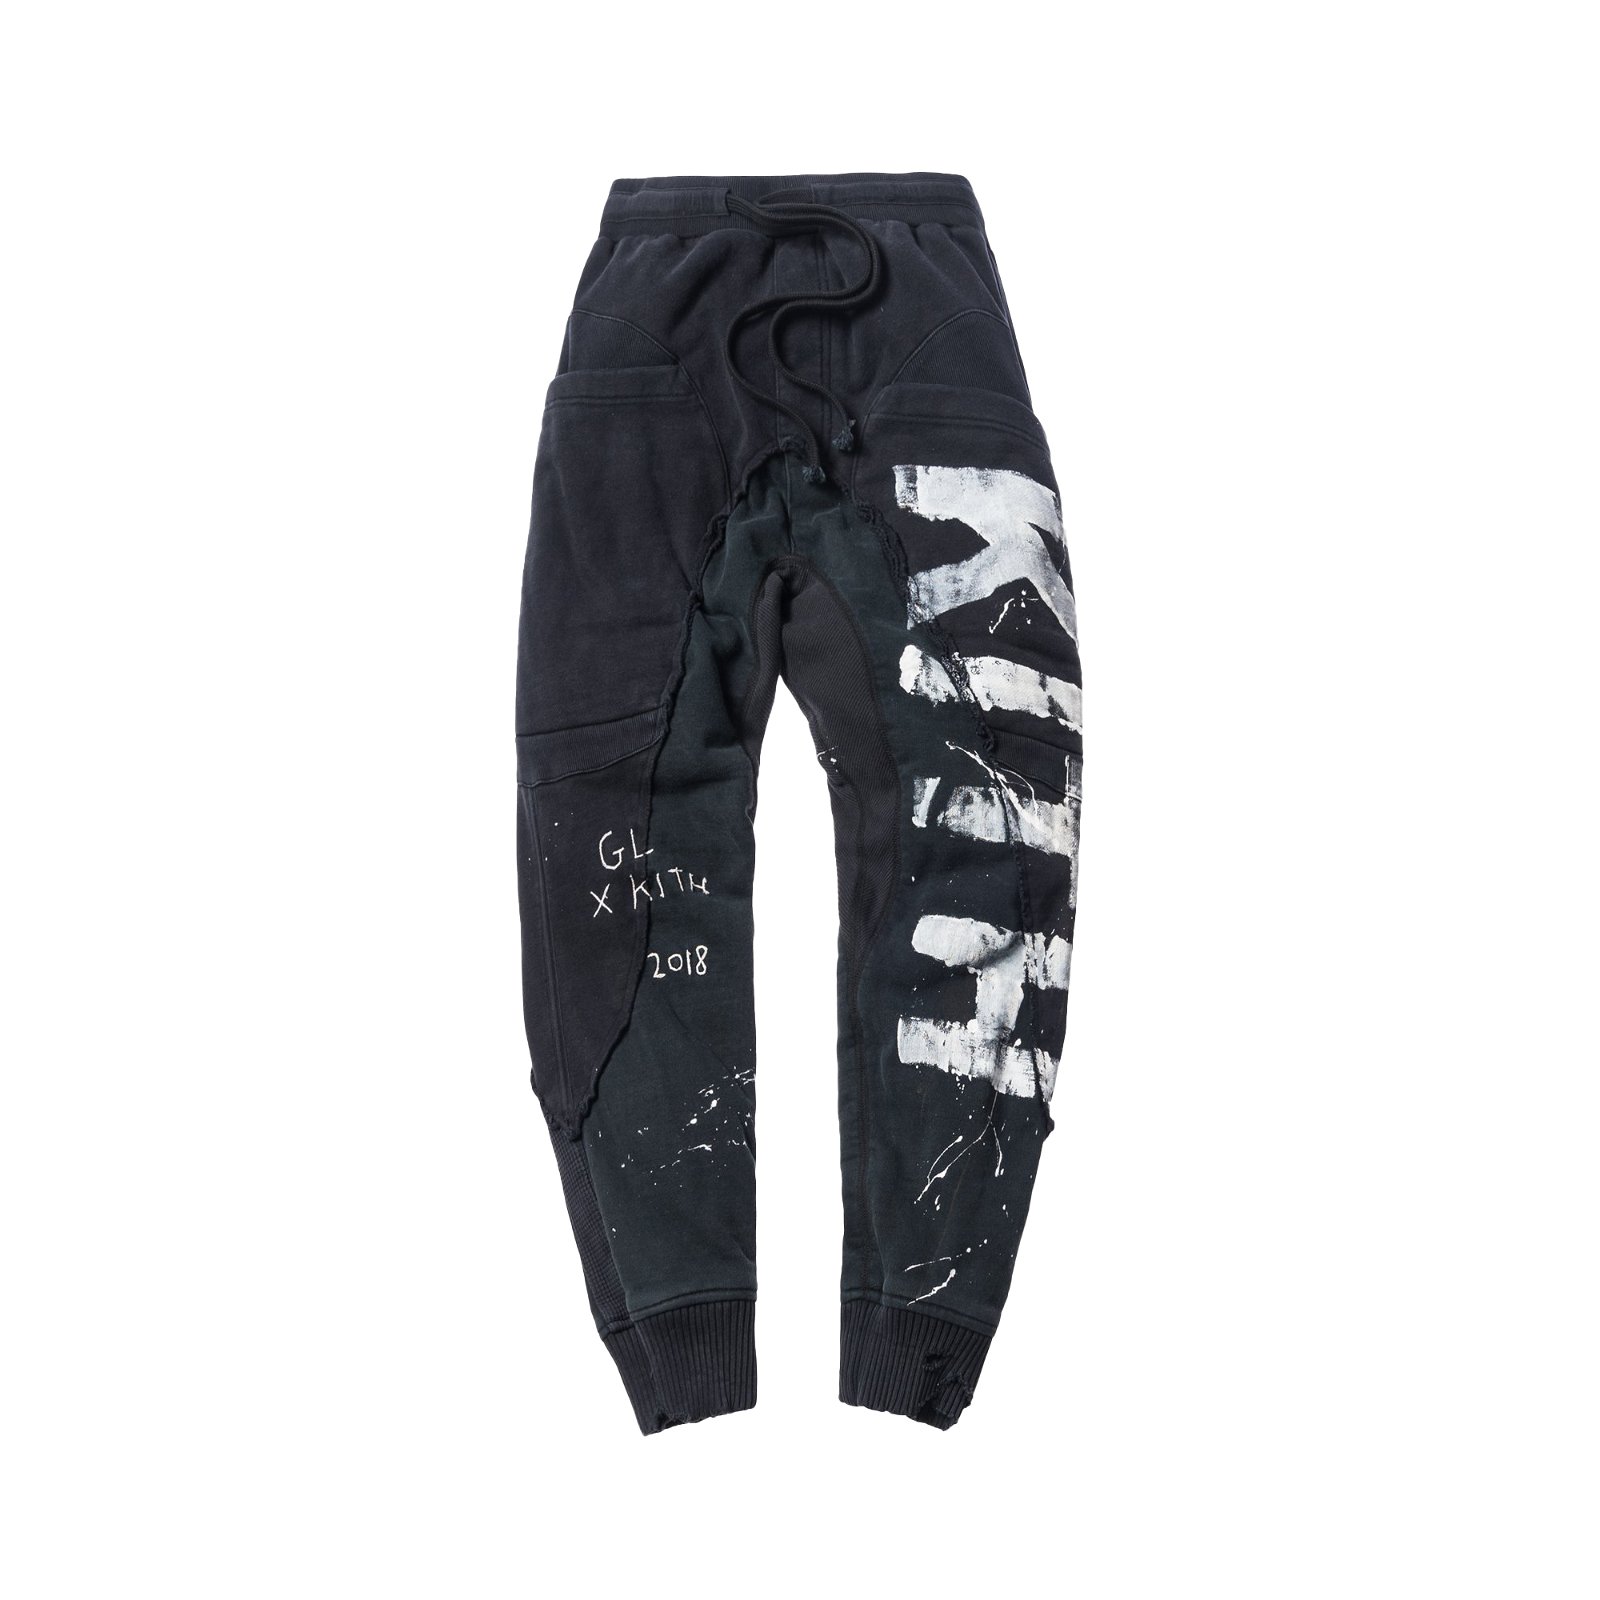 streetwear Kith x Greg Lauren 50/50 Ashford Cargo Pant Black